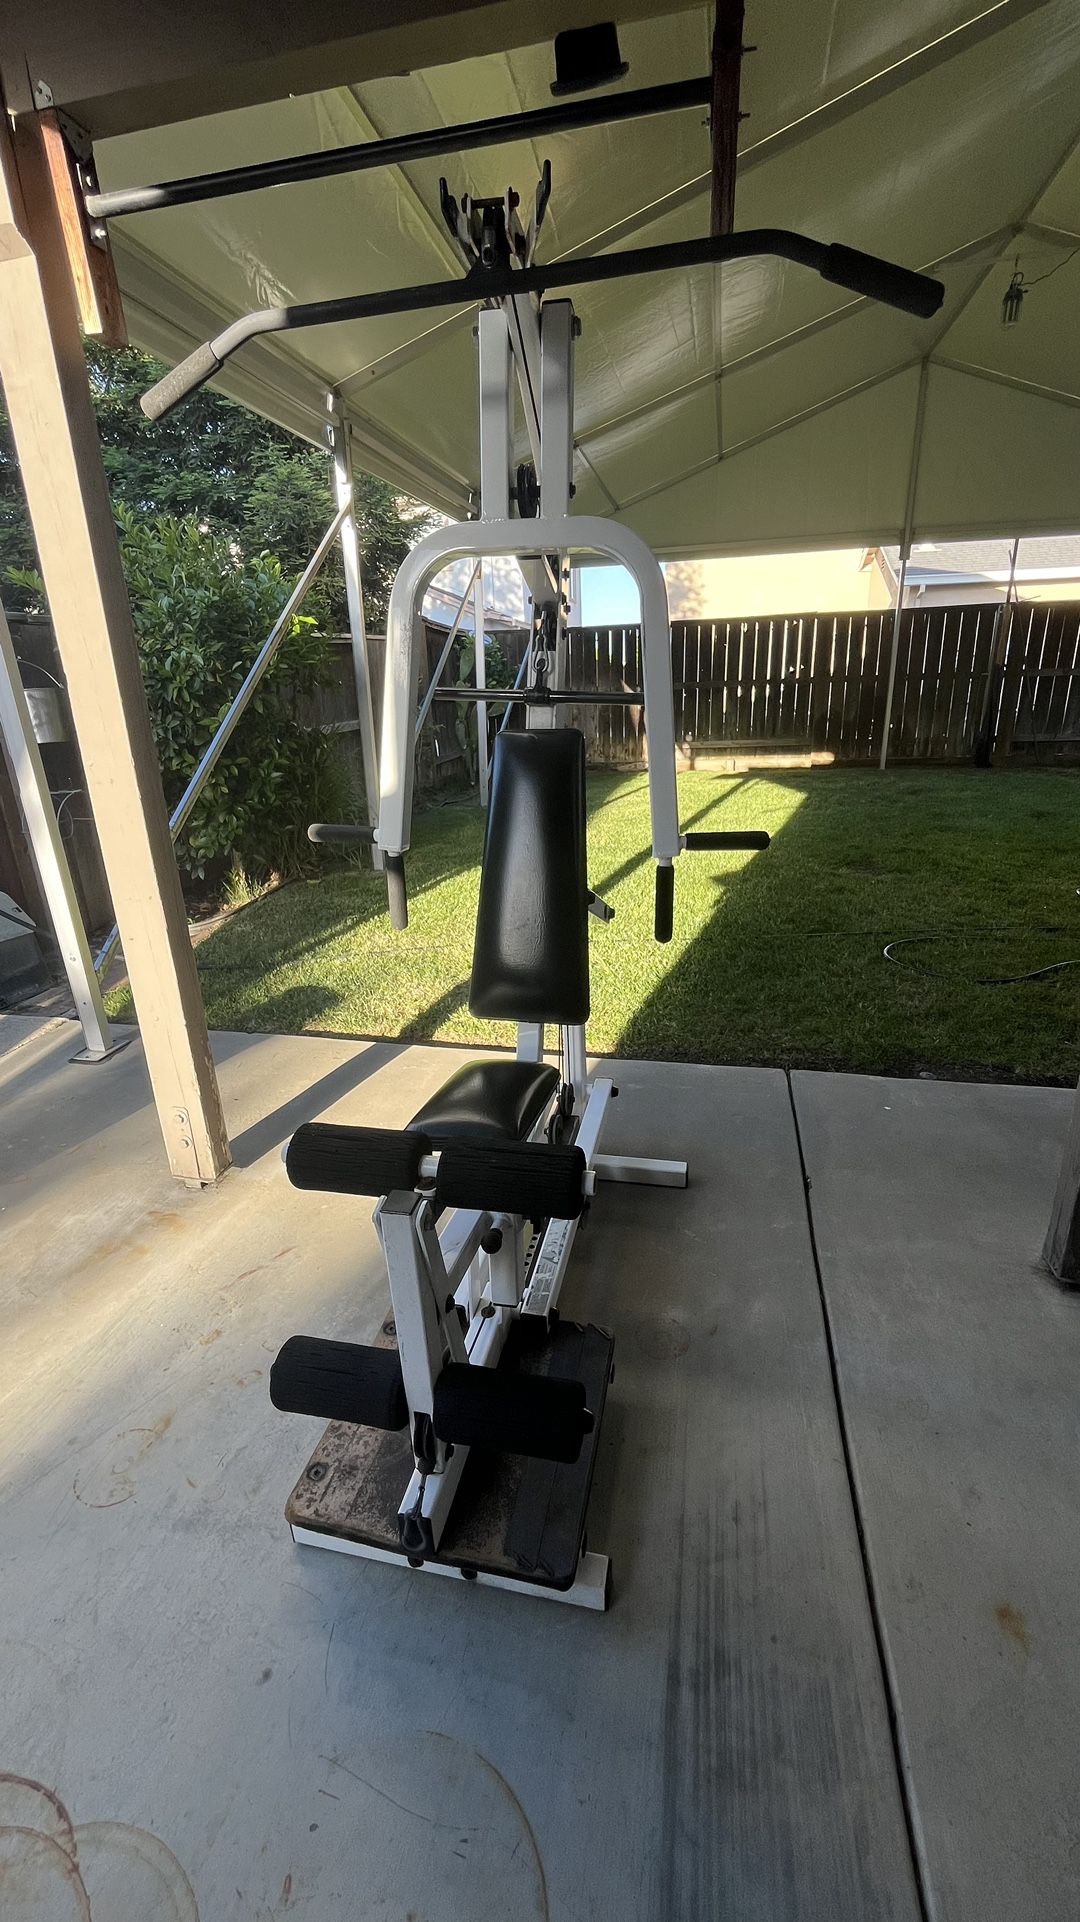 Full Body Workout Machine Home Gym Machine